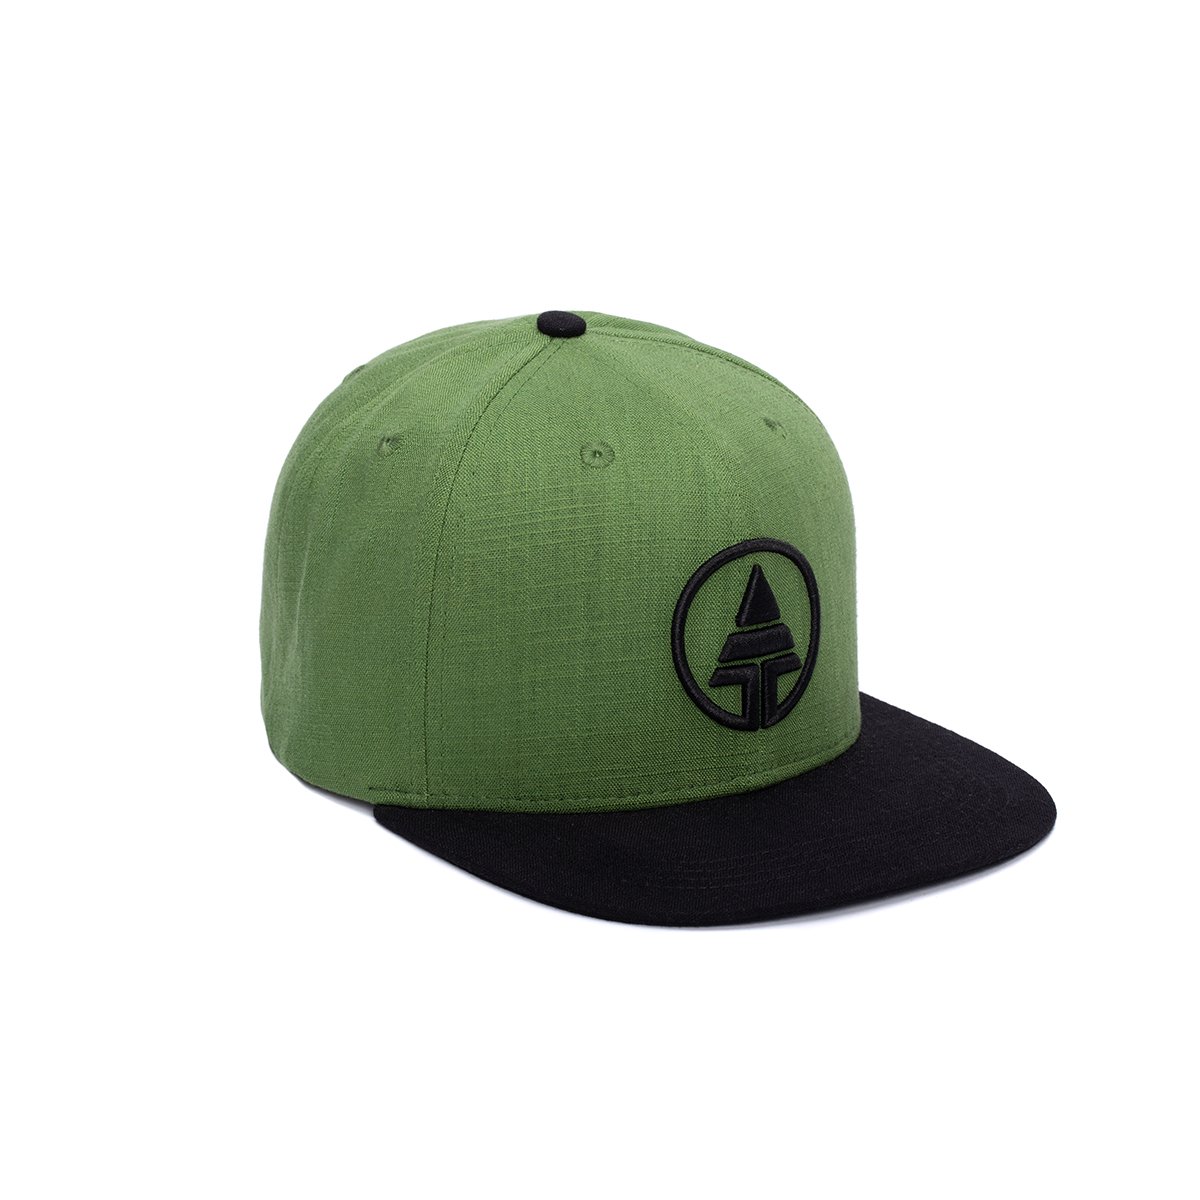 Tree Tribe Logo Snapback Hat - Green / Black Embroidered Cap